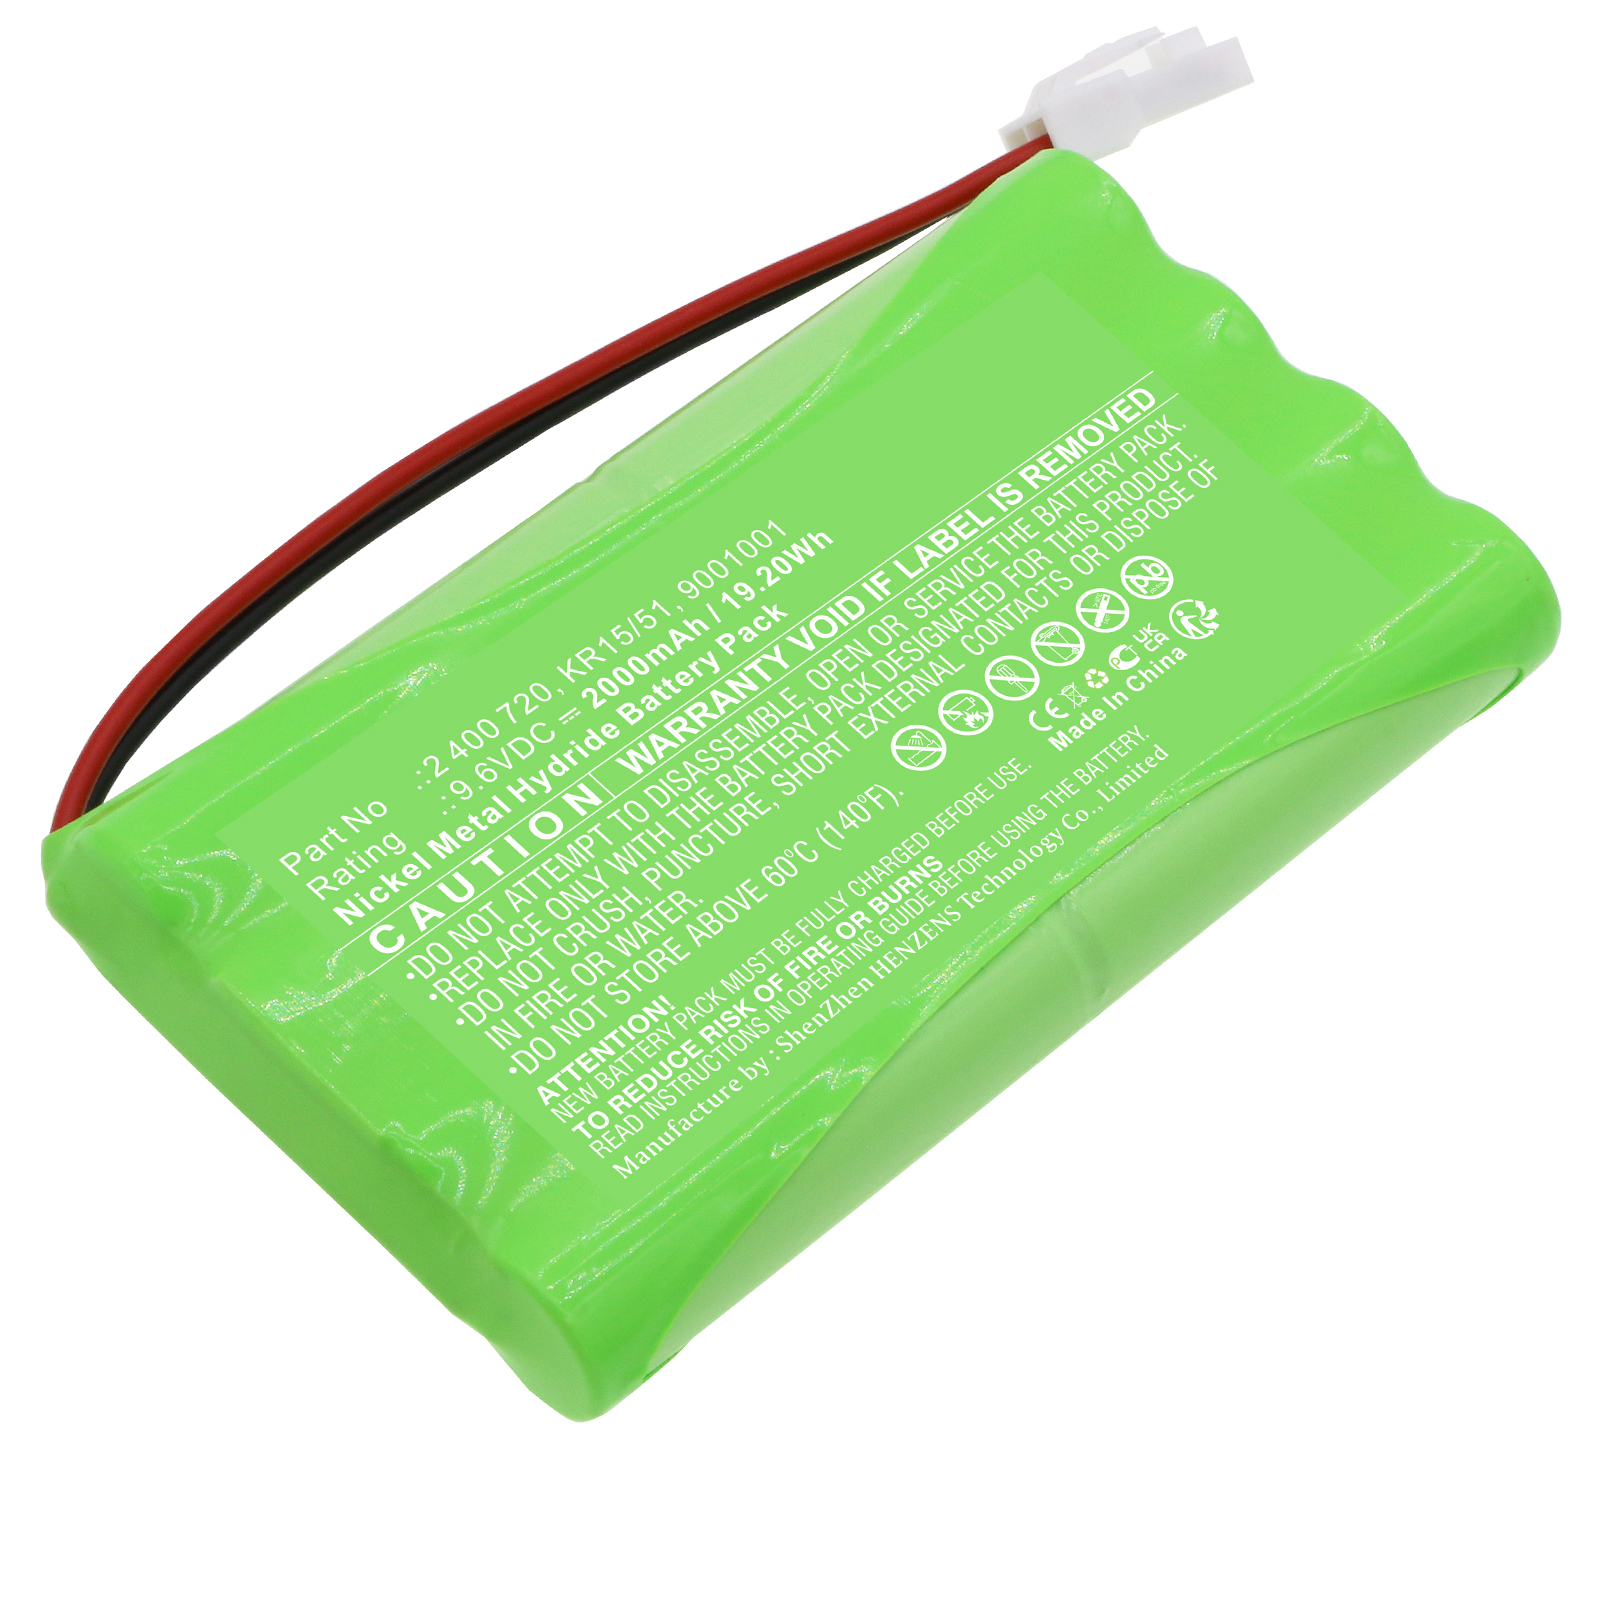 Batteries for BoschSmart Home